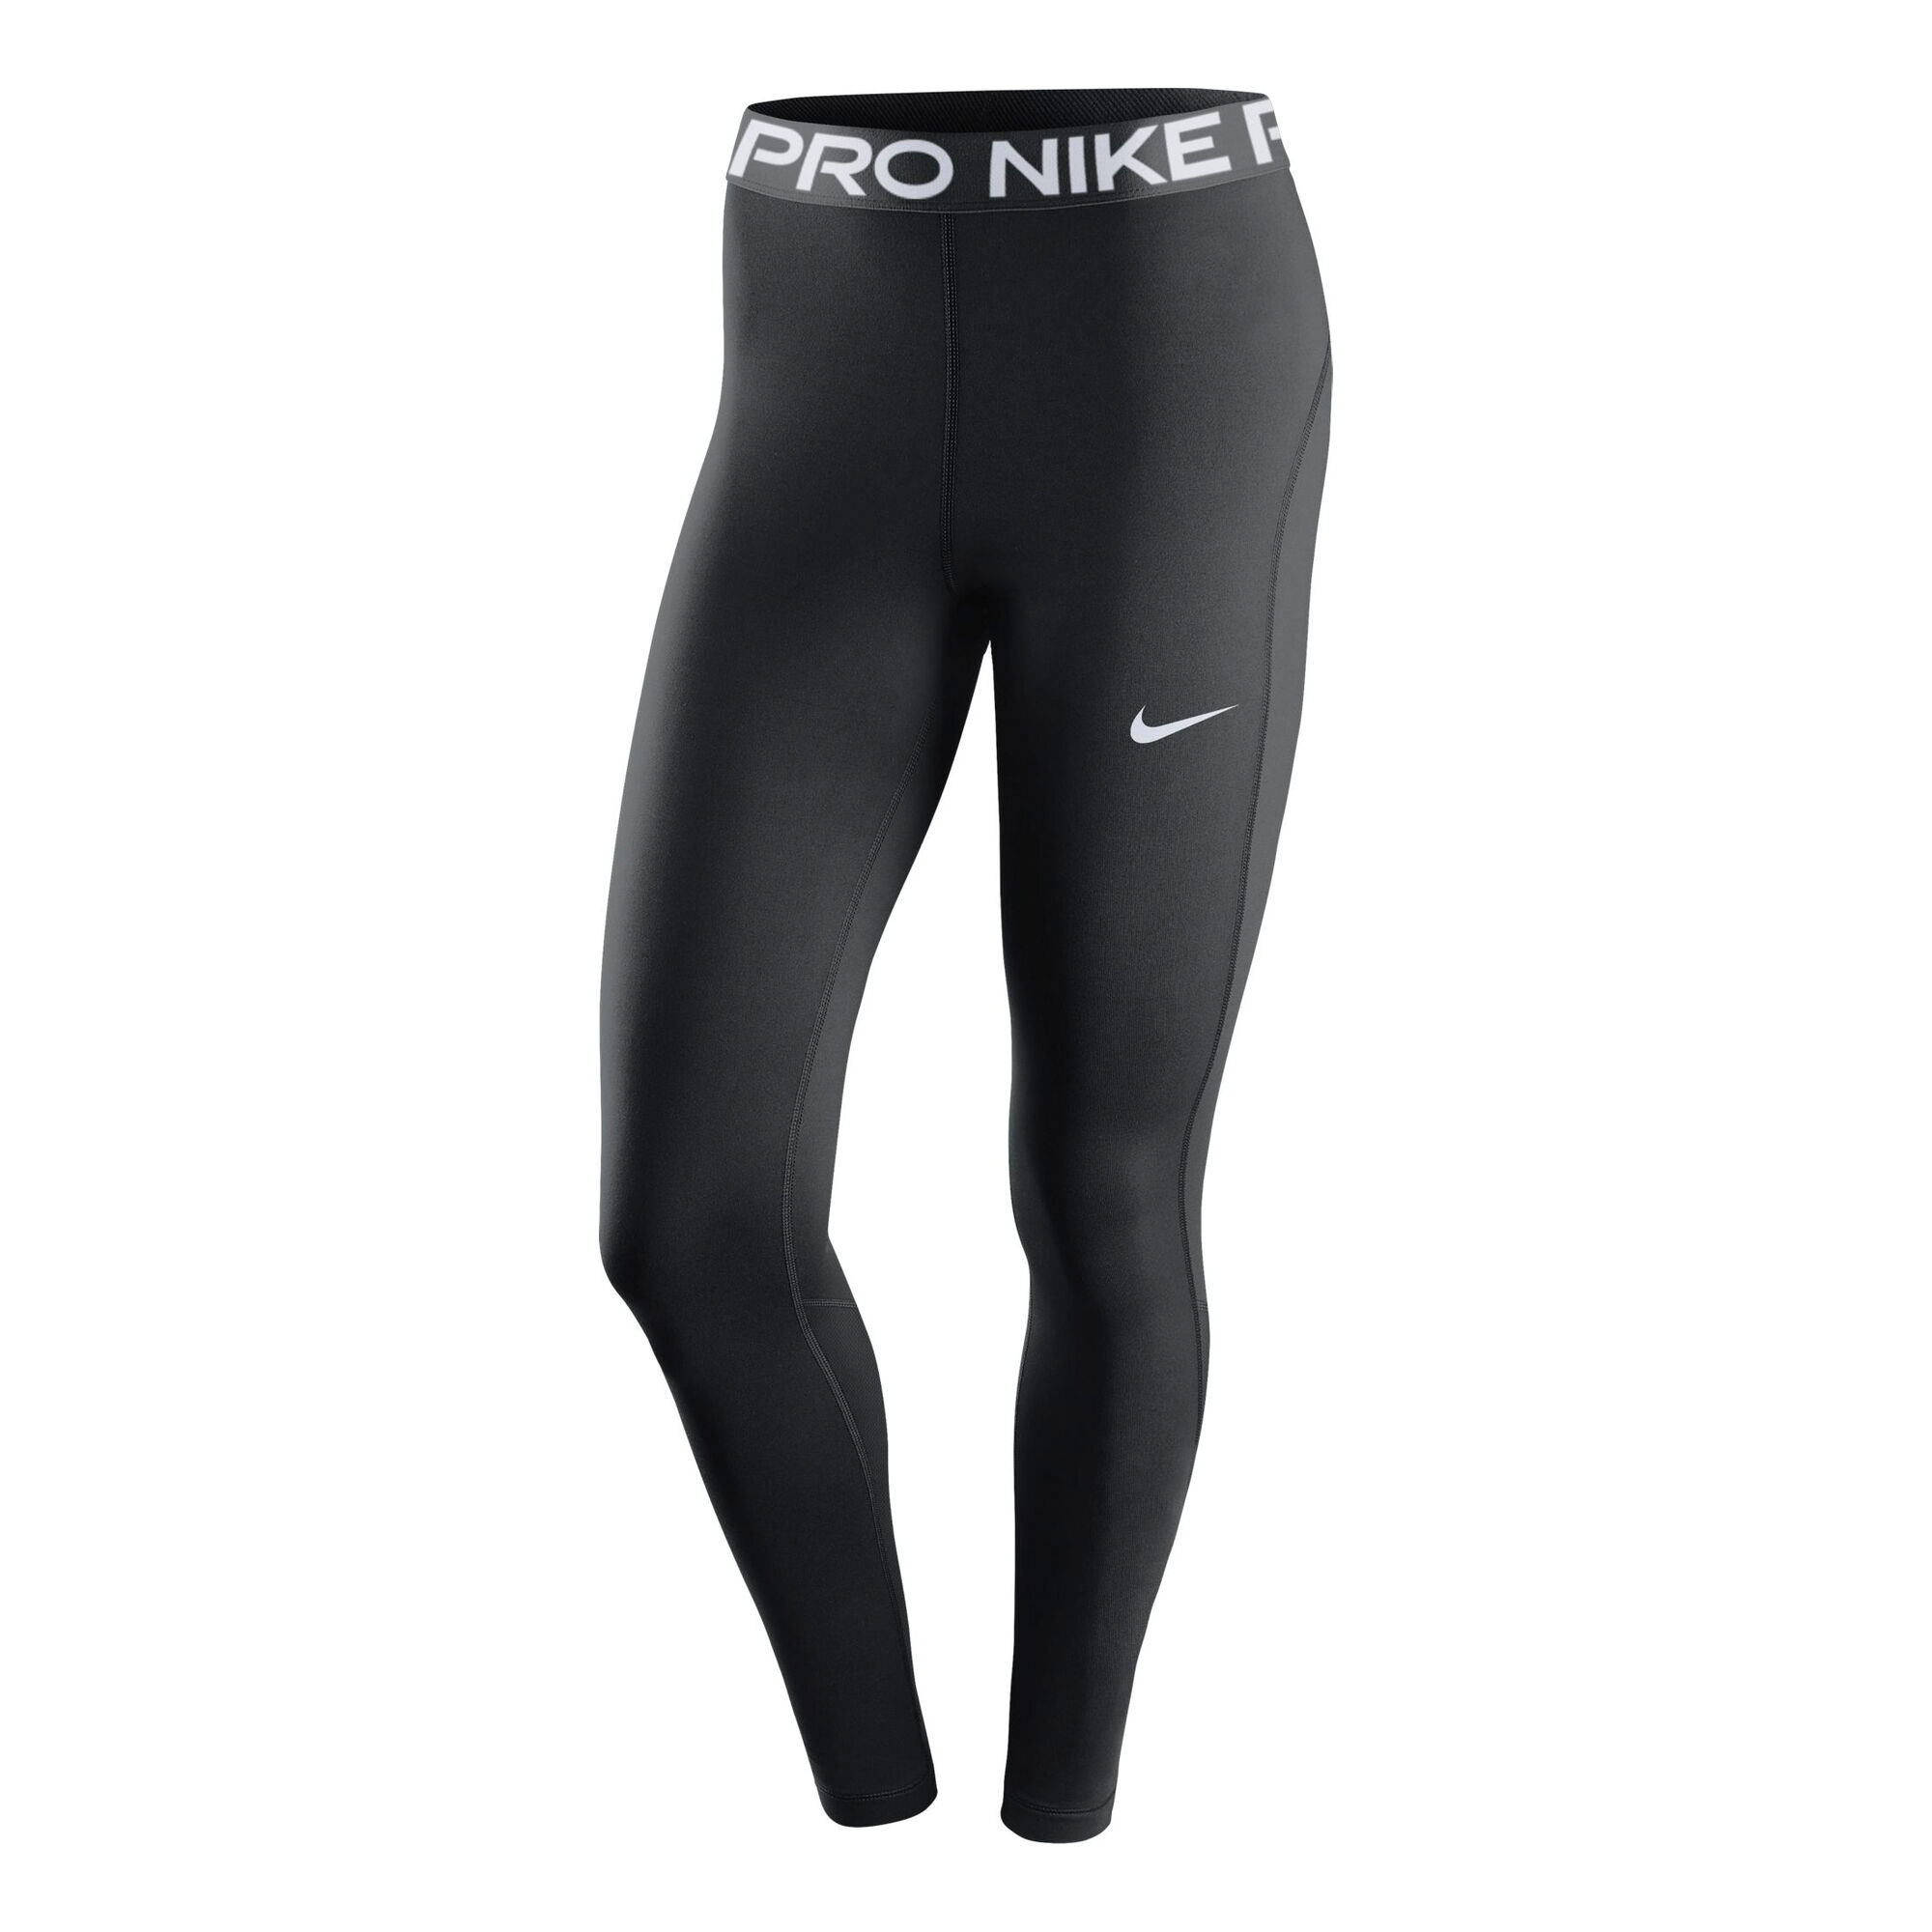 Nike – Pro Training – Kurz geschnittene Leggings in Schwarz mit